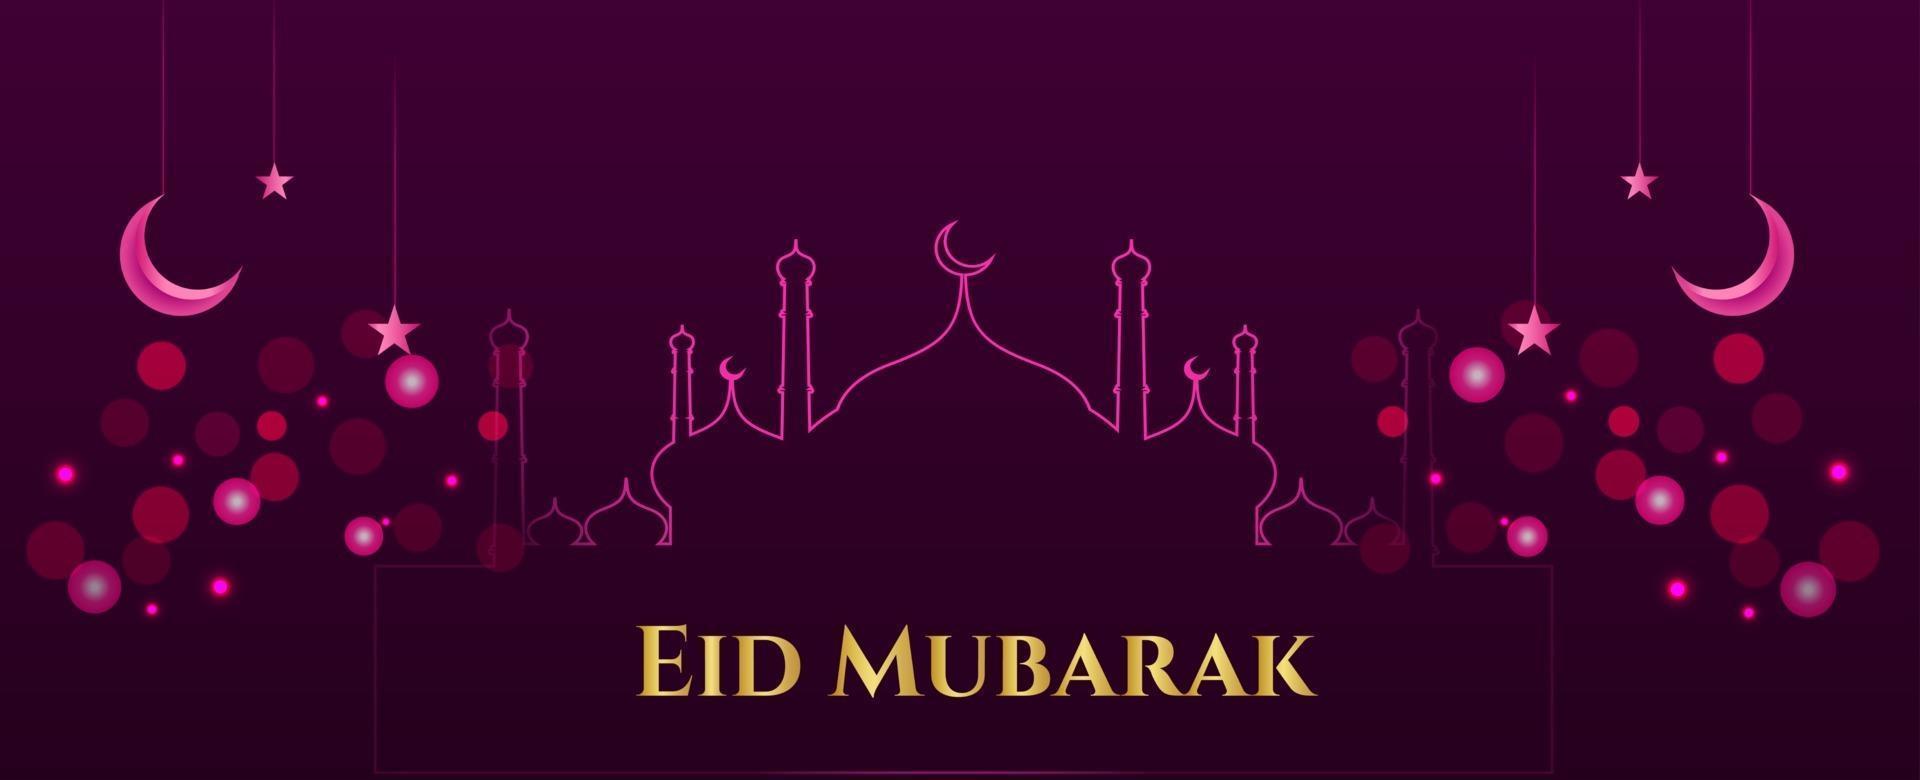 Eid Mubarak Festival dekorativen Hintergrund vektor